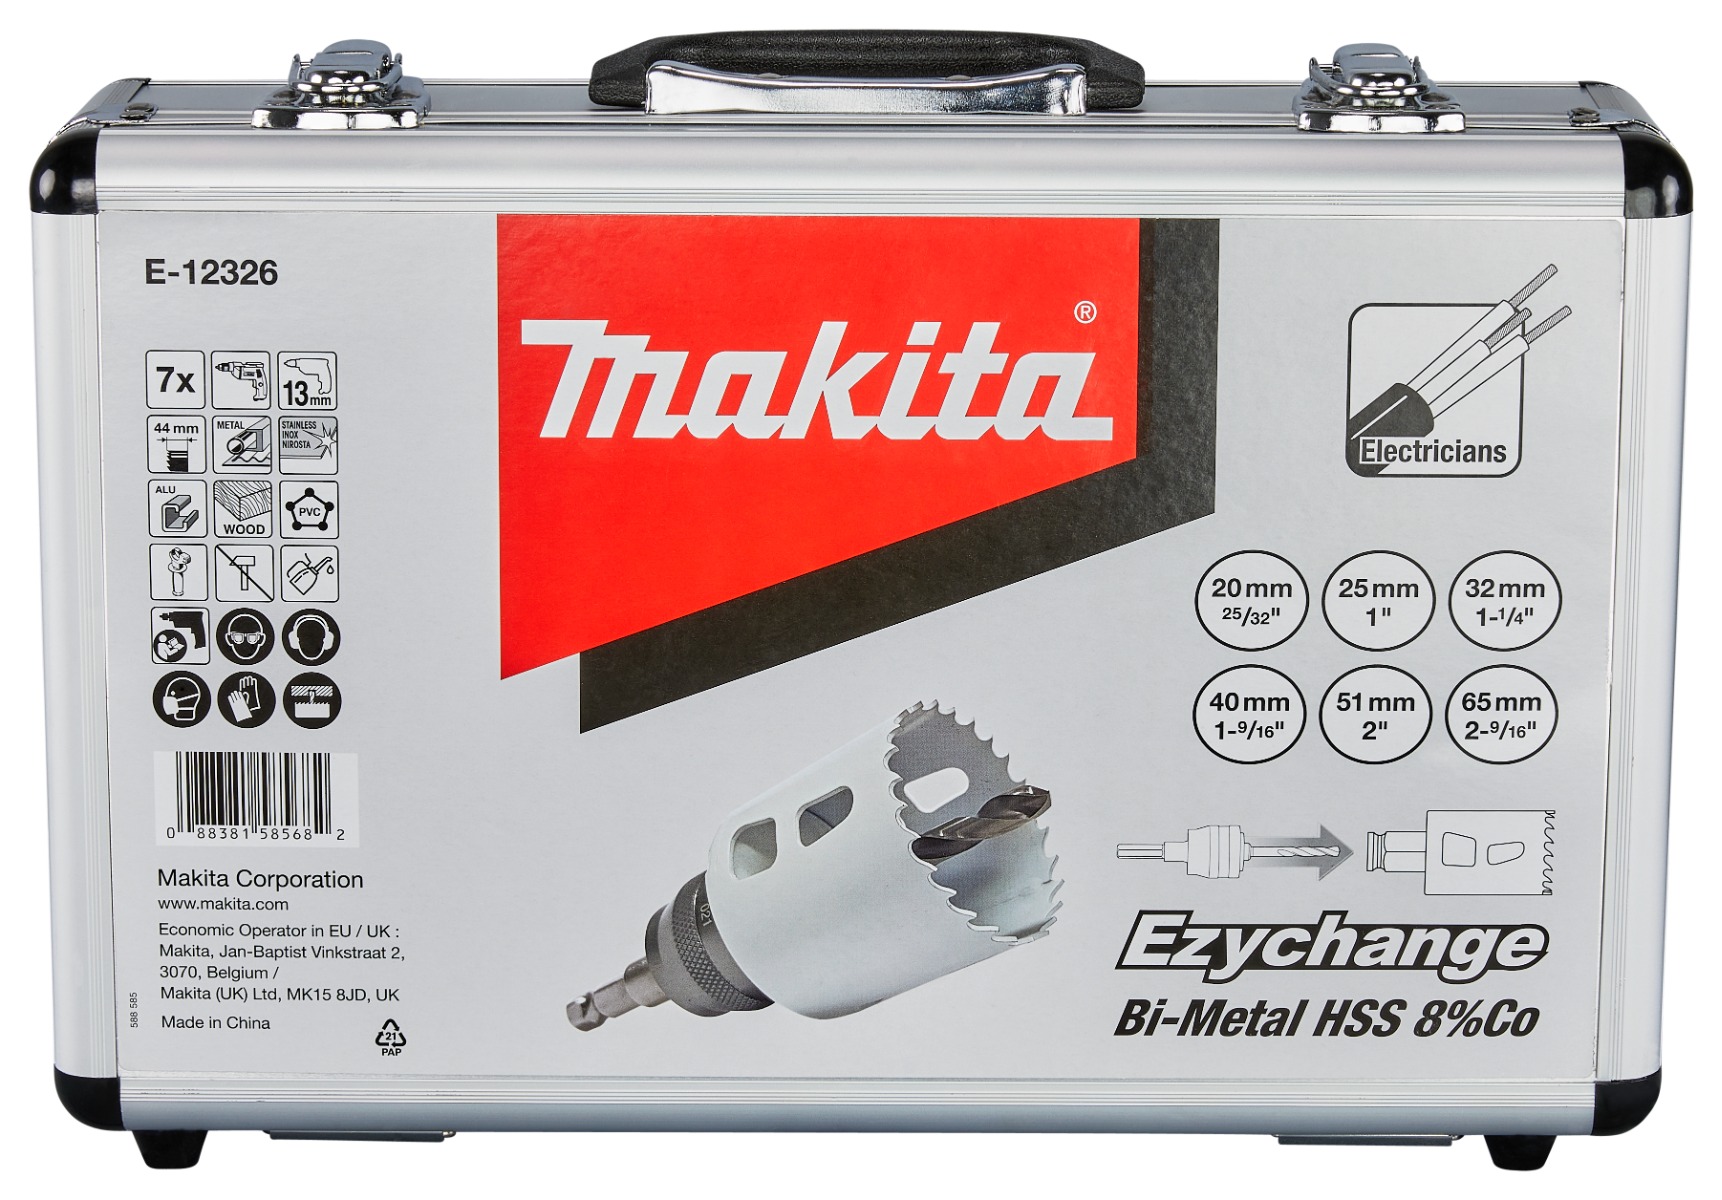 Makita E-12326 Gatzaagset 7-delig snelwissel 20-65mm | Mtools